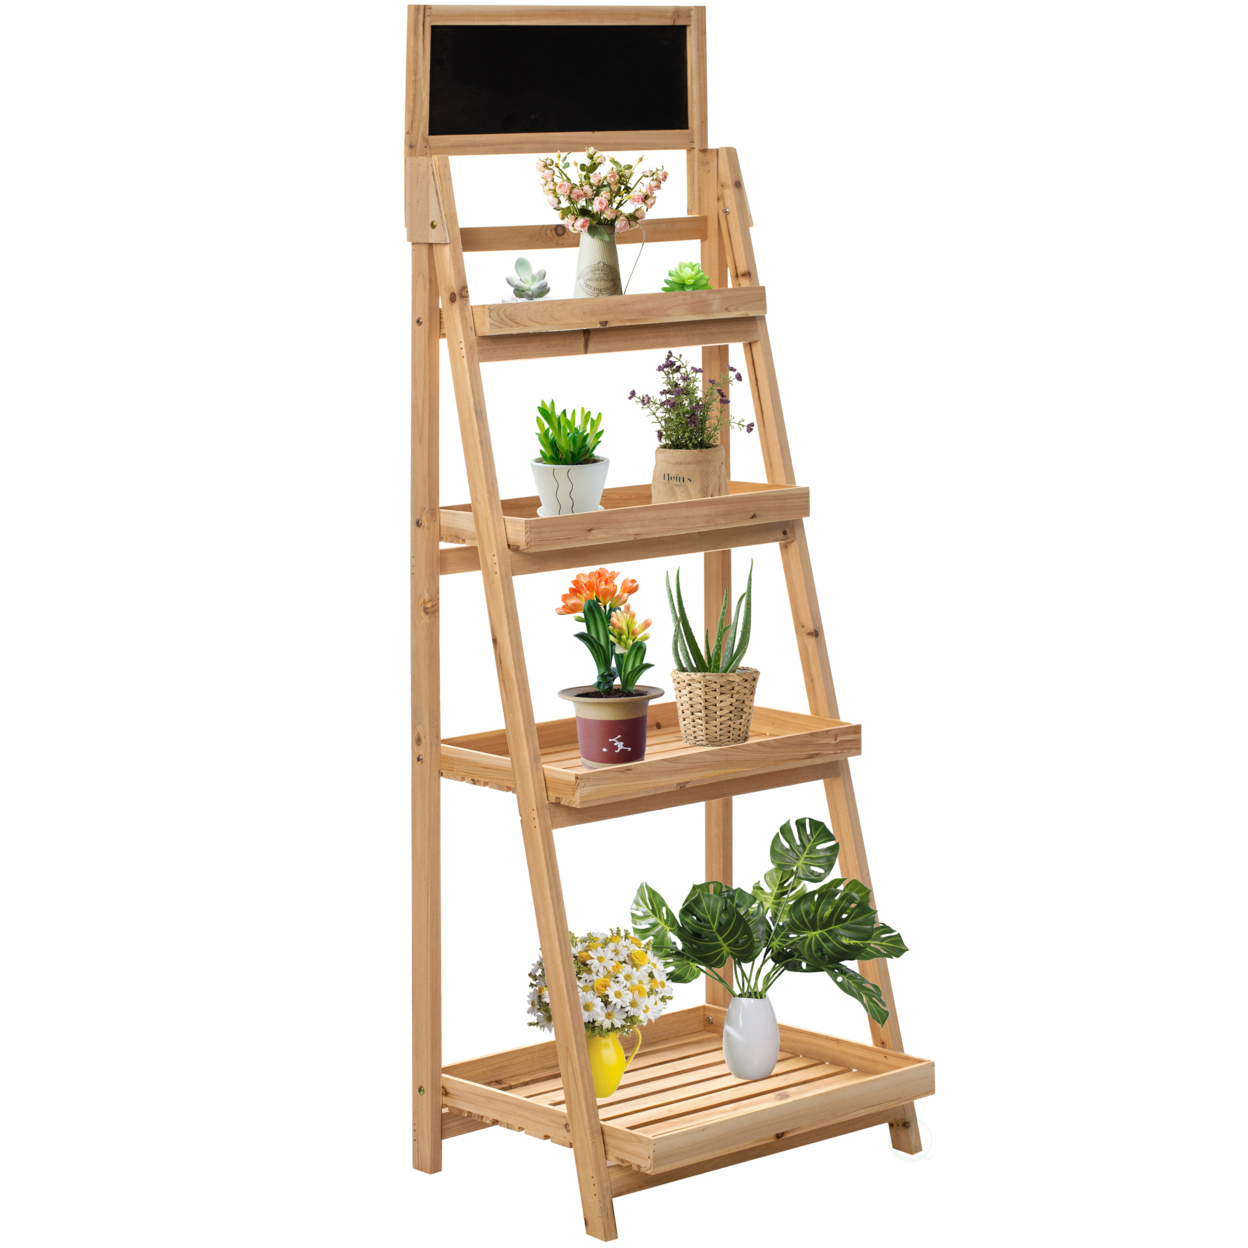 Decorative Wooden 4-Tier Chalkboard Ladder Shelf, Flower Plant Pot Display Shelf Bookshelf, Plant Flower Stand, Storage Display Shelves